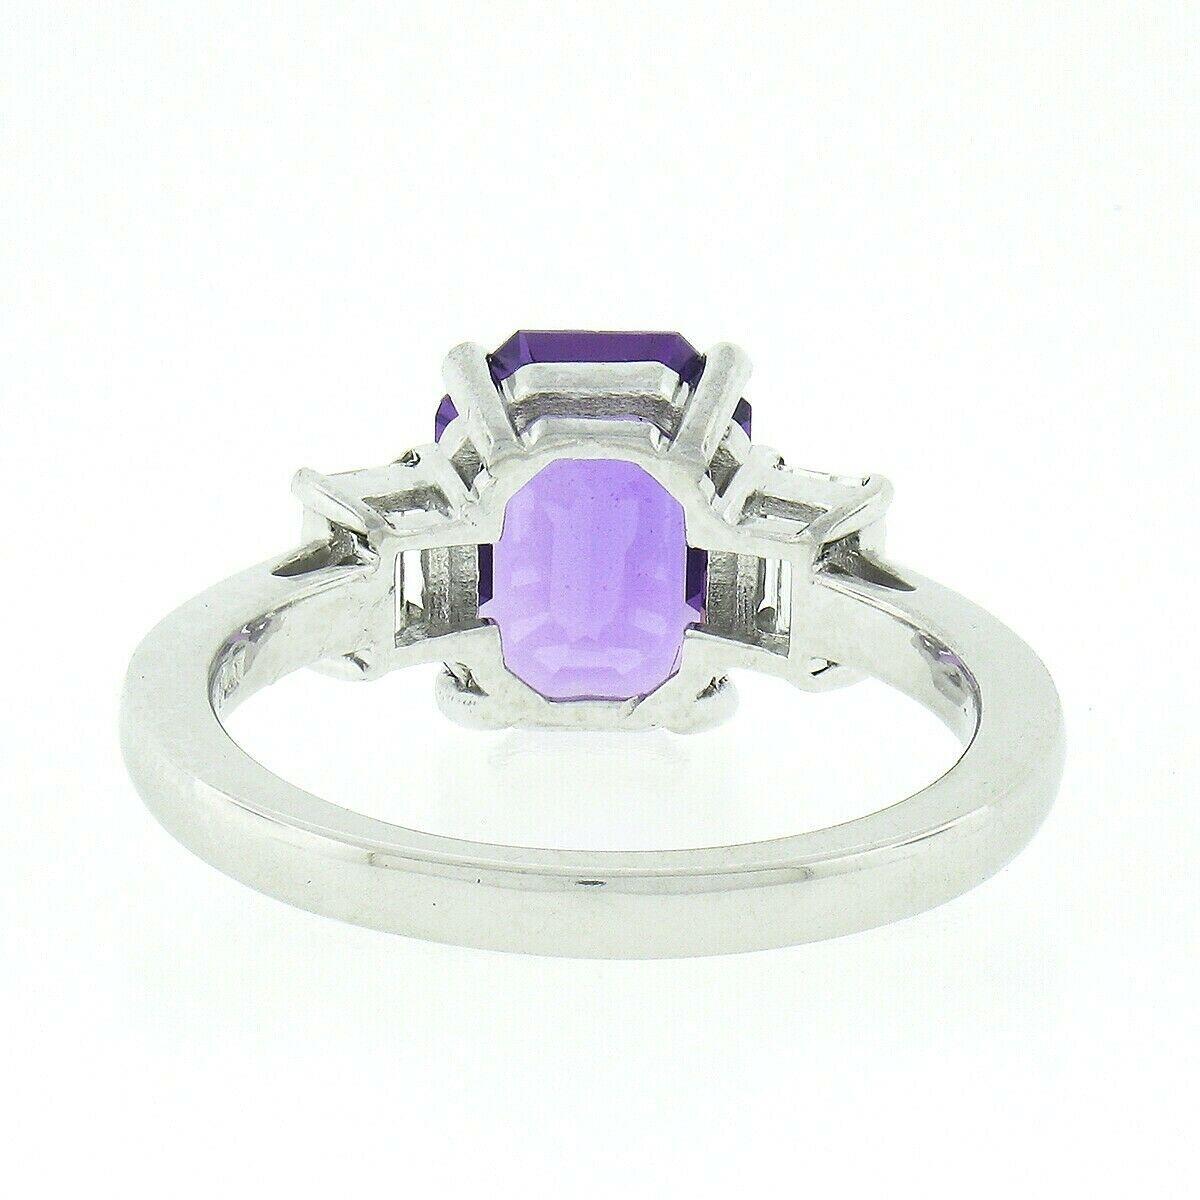 New Platinum GIA No Heat Purple Sapphire & Diamond Emerald Cut Engagement Ring 1